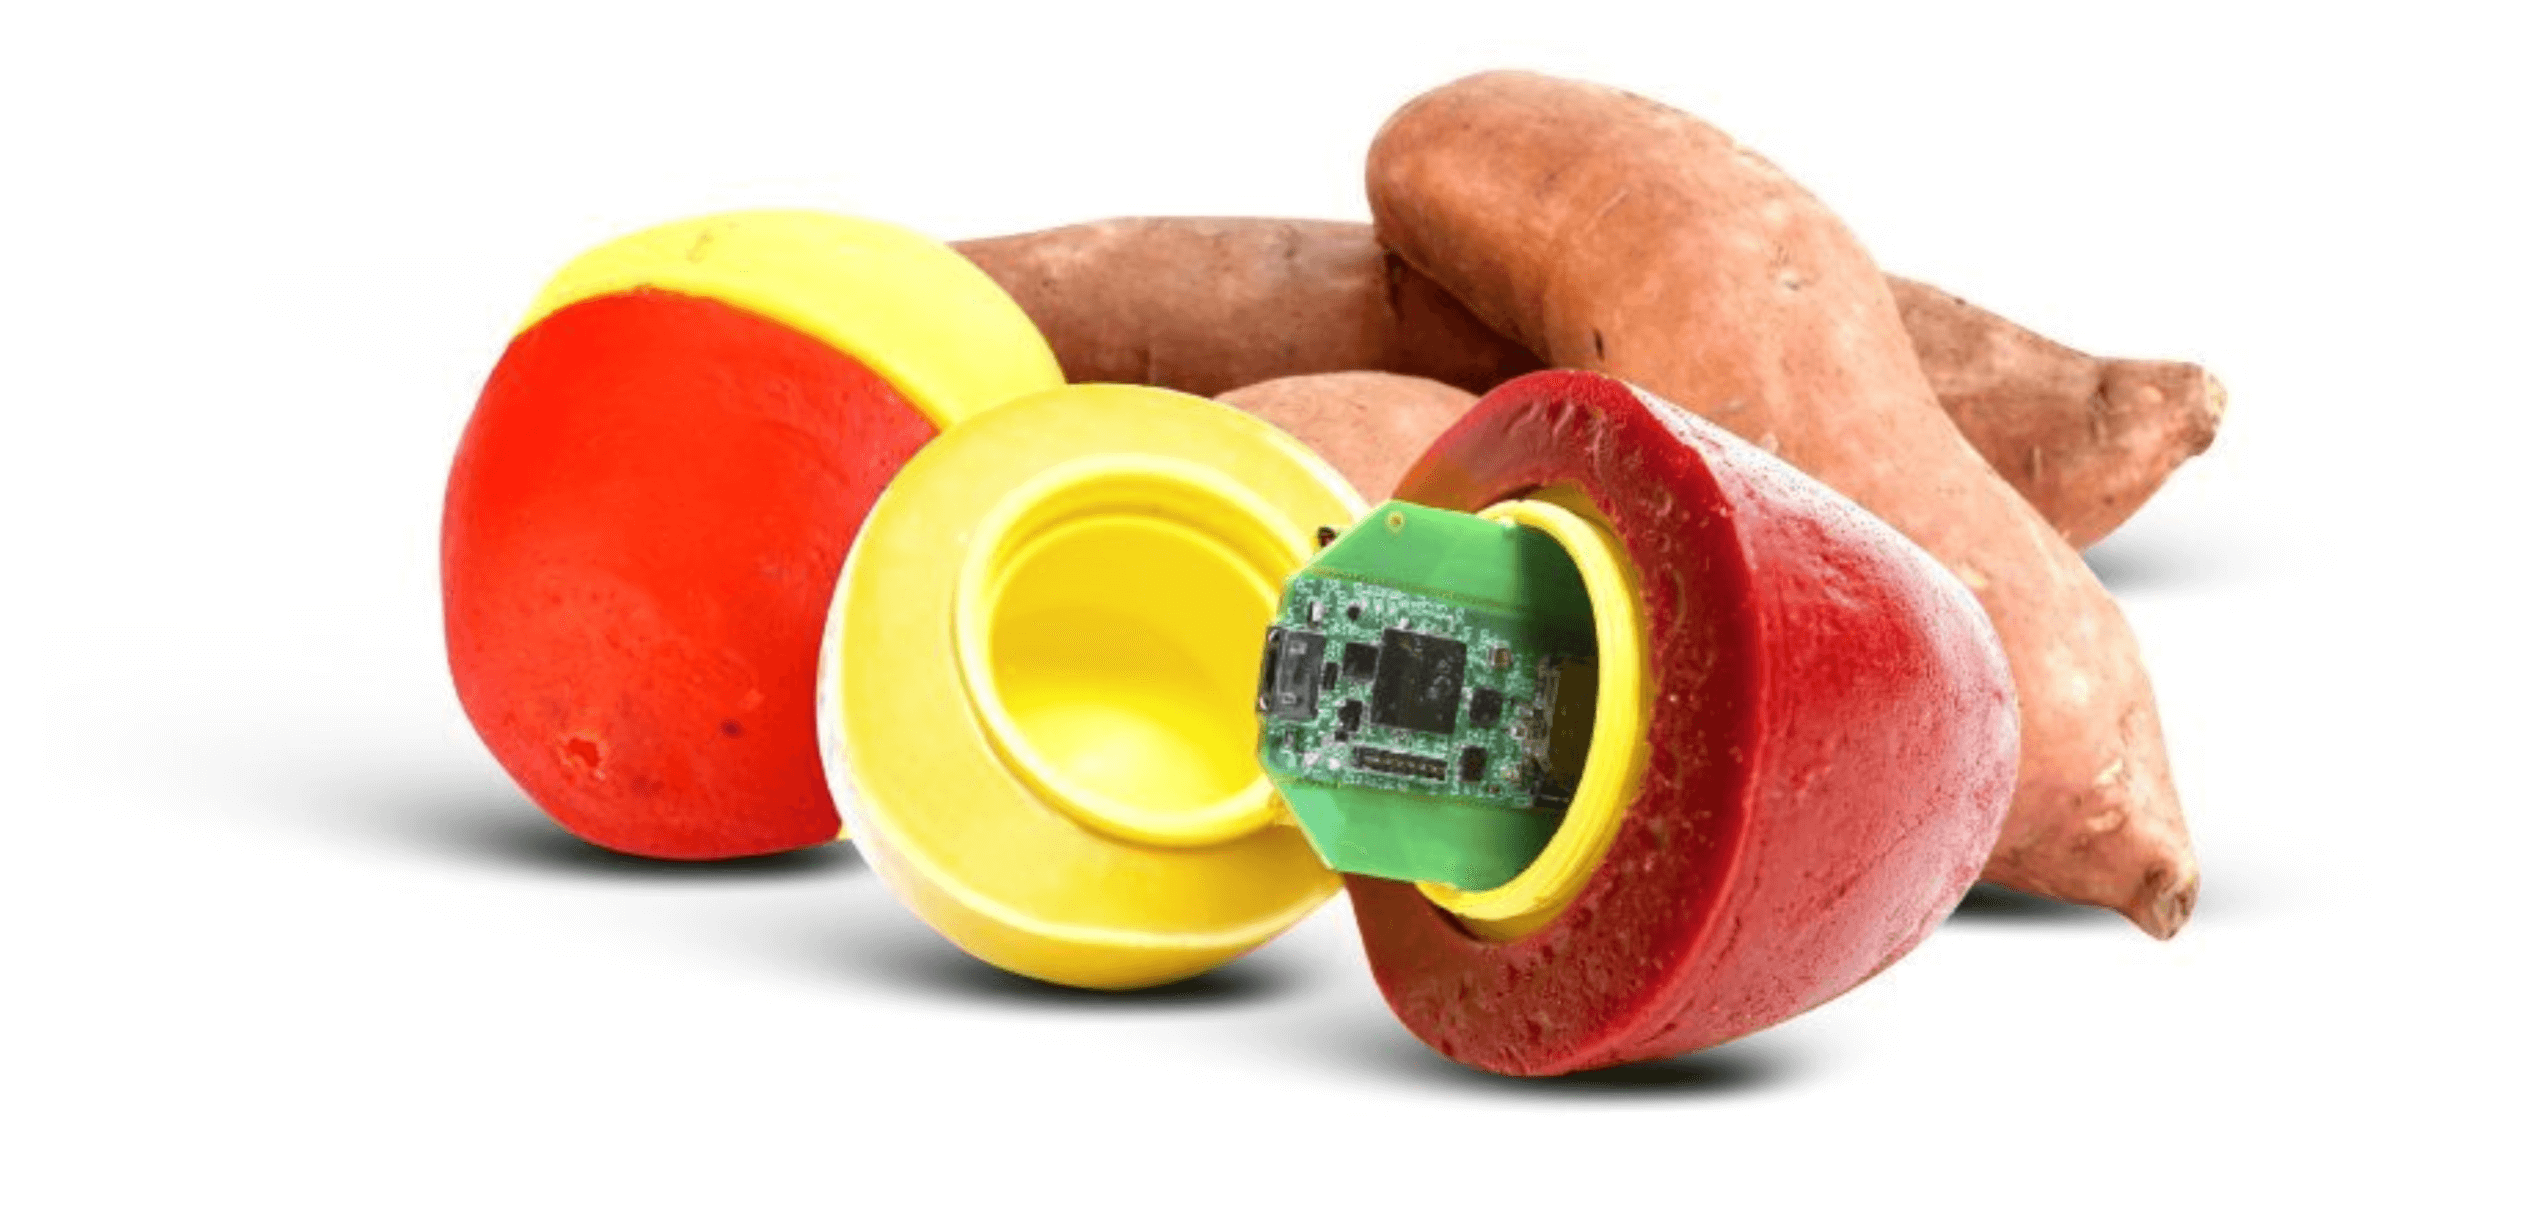 sweet potato with smartspud in-line smart sensor